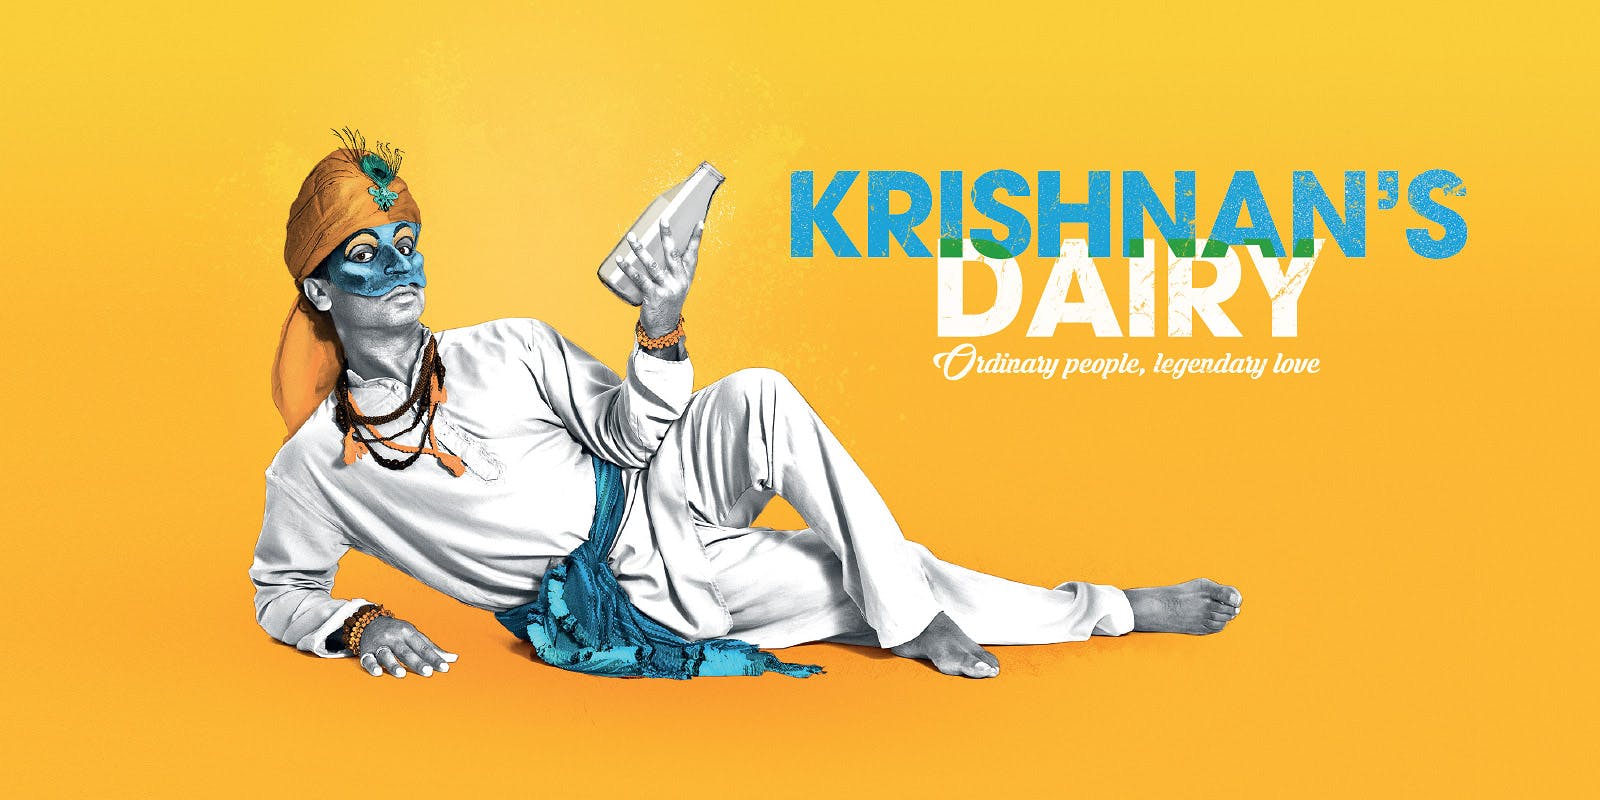 Krishnan's Dairy